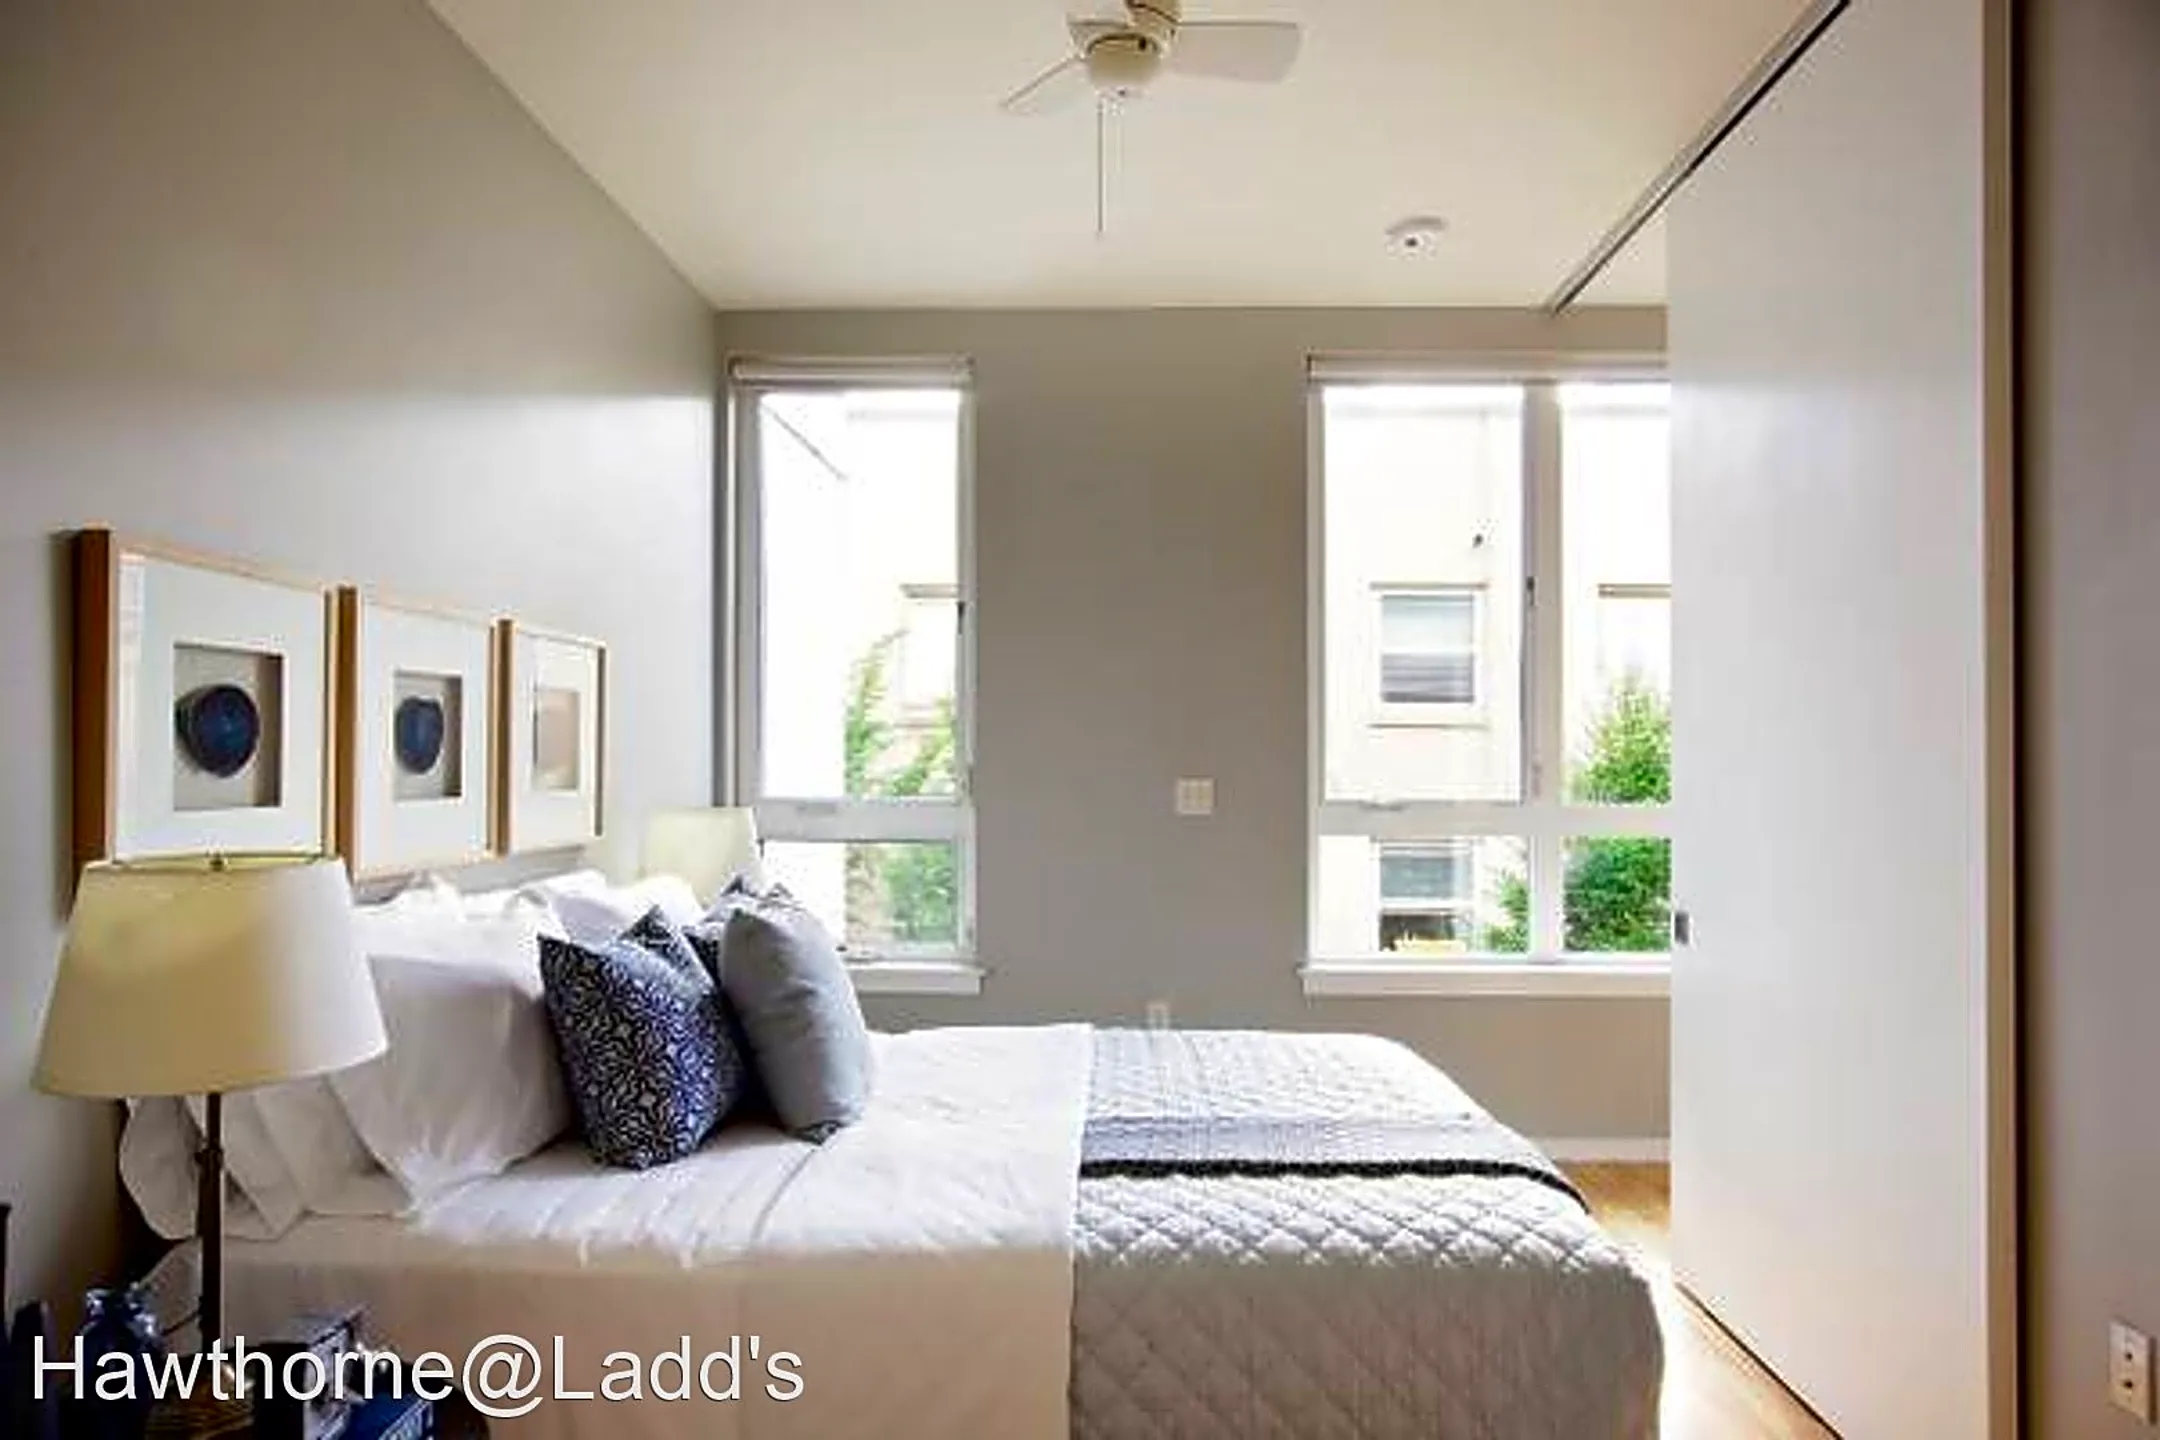 Bedroom - Hawthorne @ Ladd's - 1 & 2 Bedroom Apartment Homes - Portland, OR